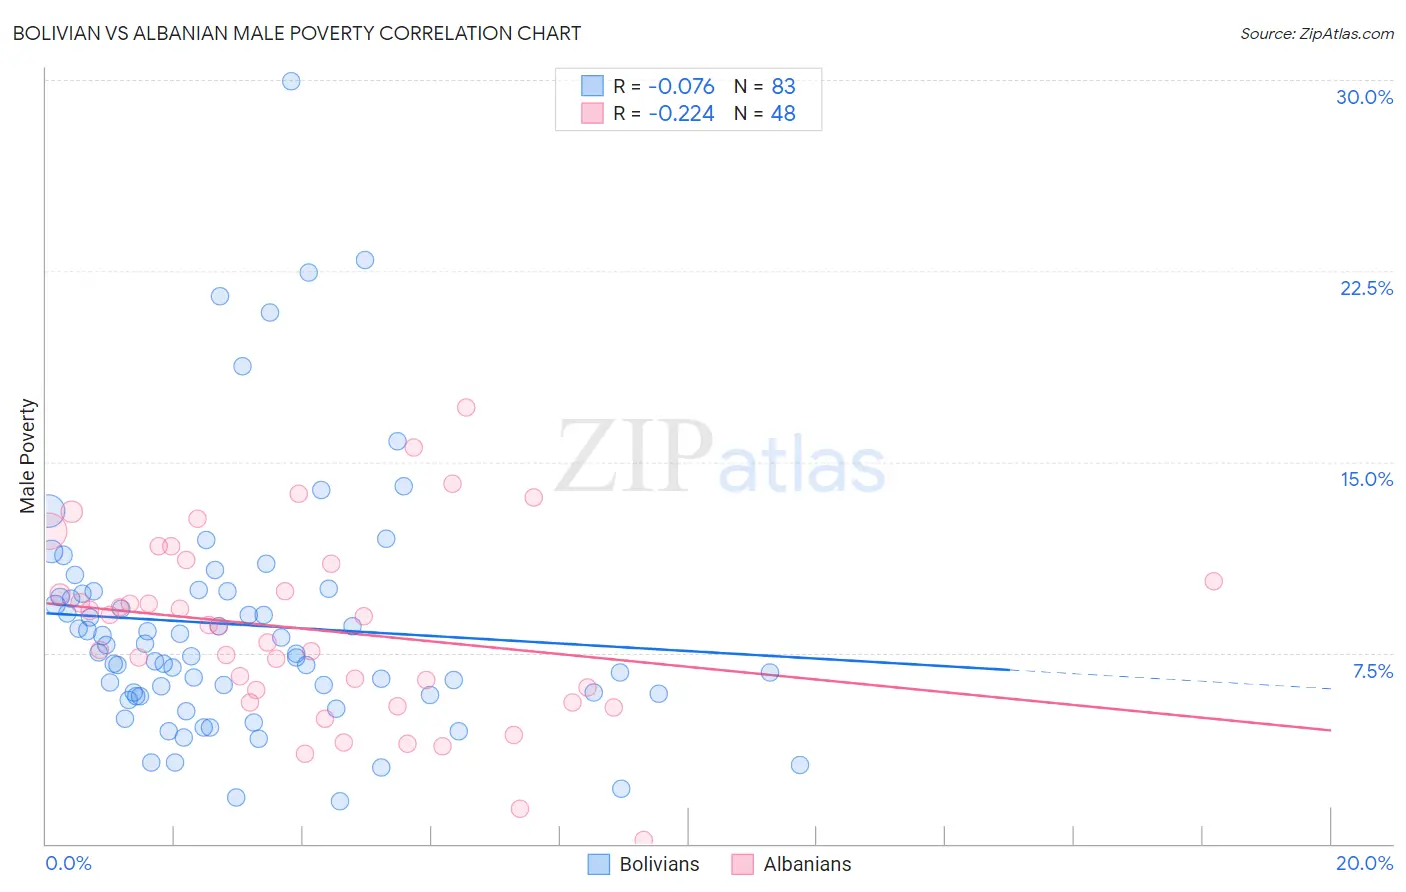 Bolivian vs Albanian Male Poverty